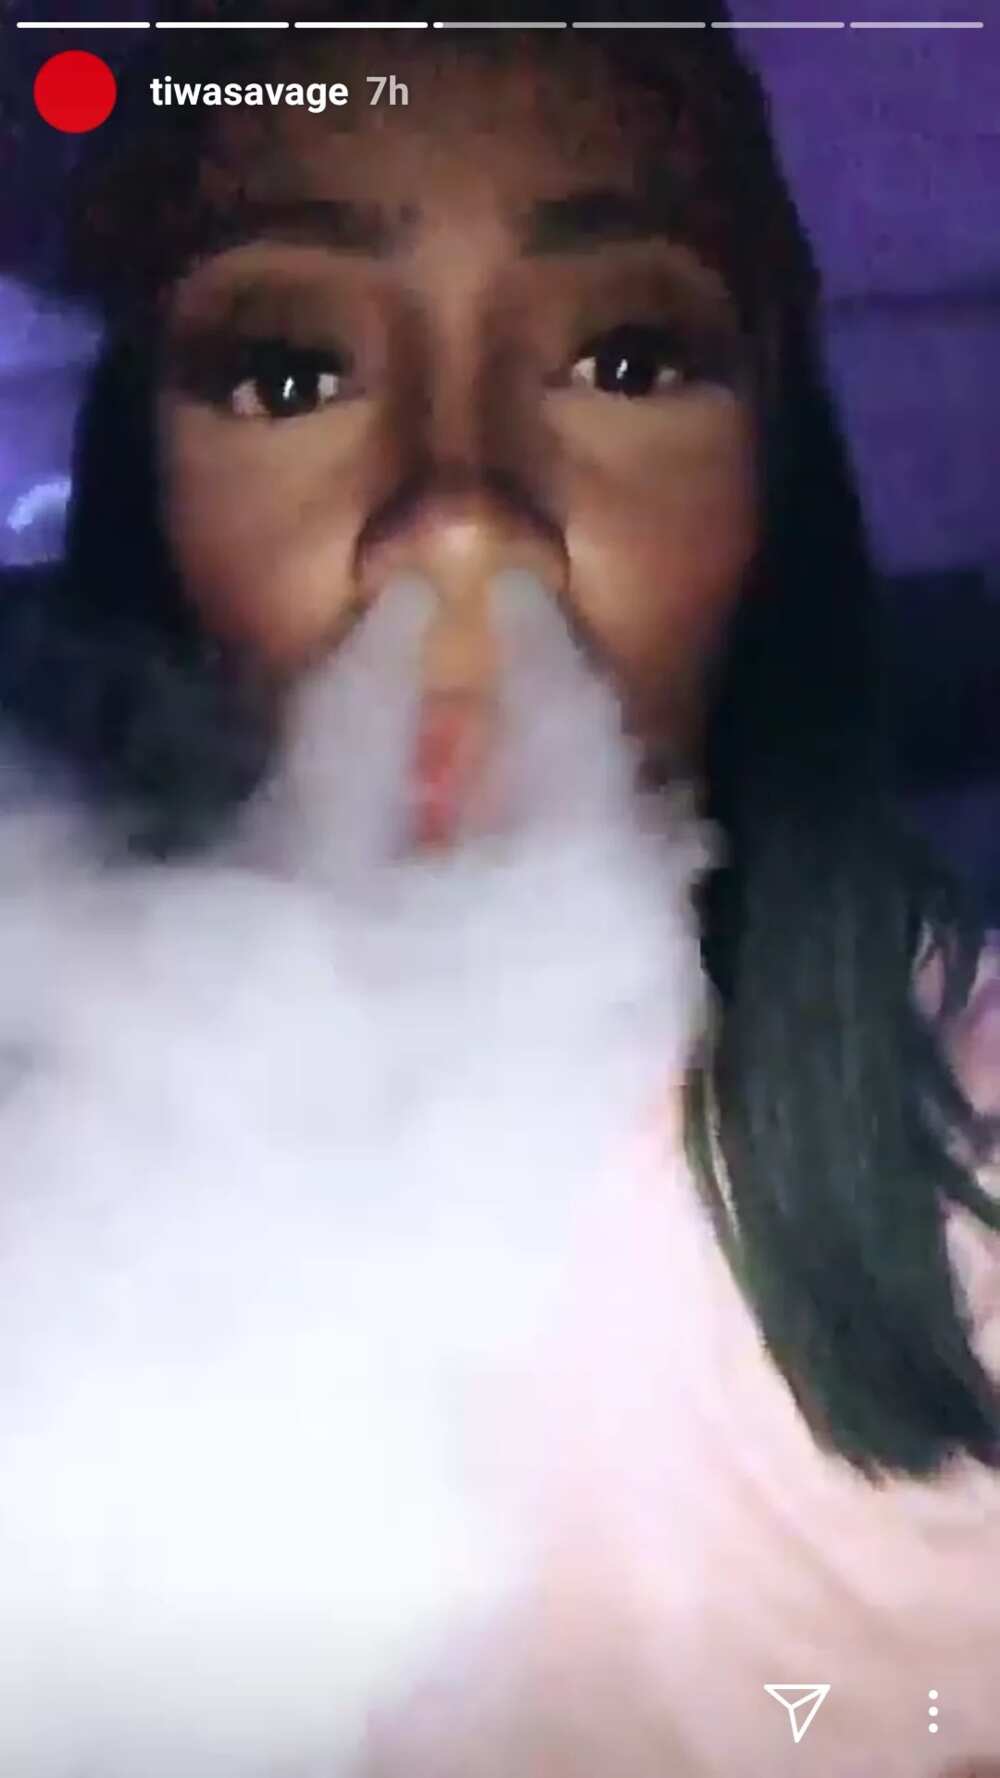 Rare photos of singer Tiwa Savage partying and smoking shisha in a club (photos)